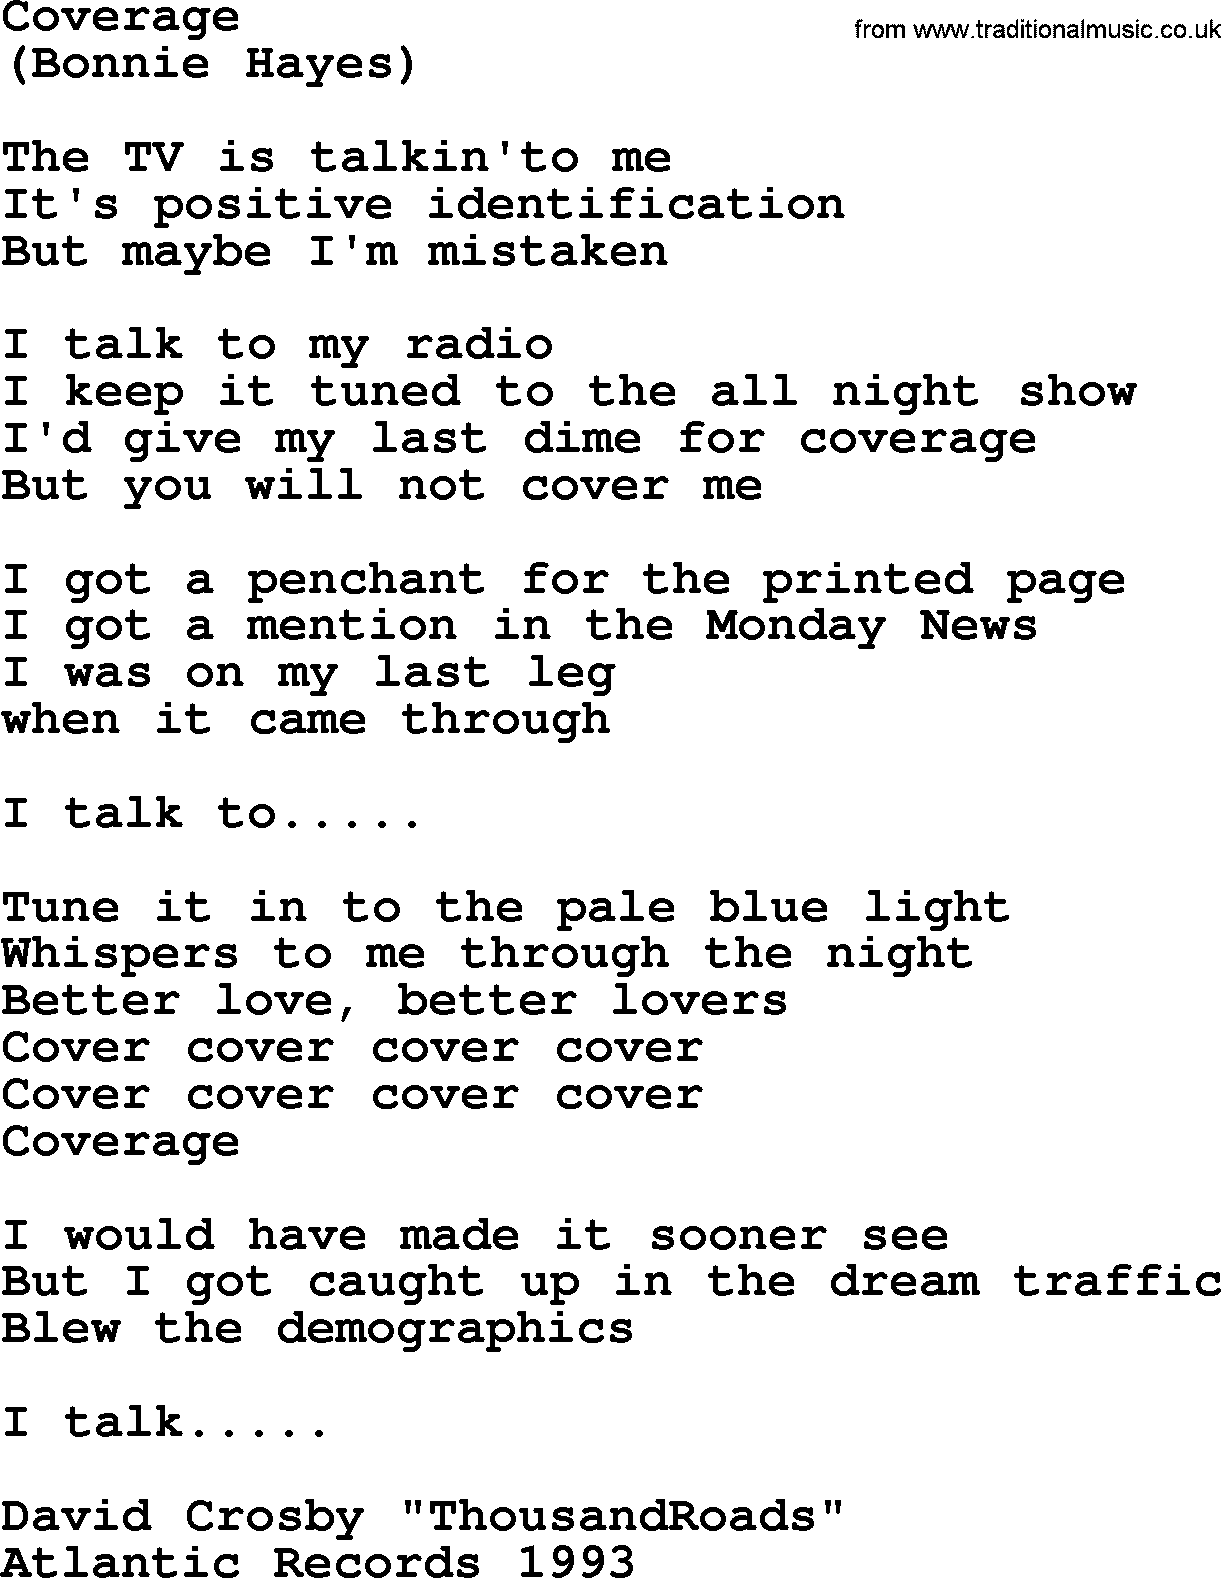 The Byrds song Coverage, lyrics